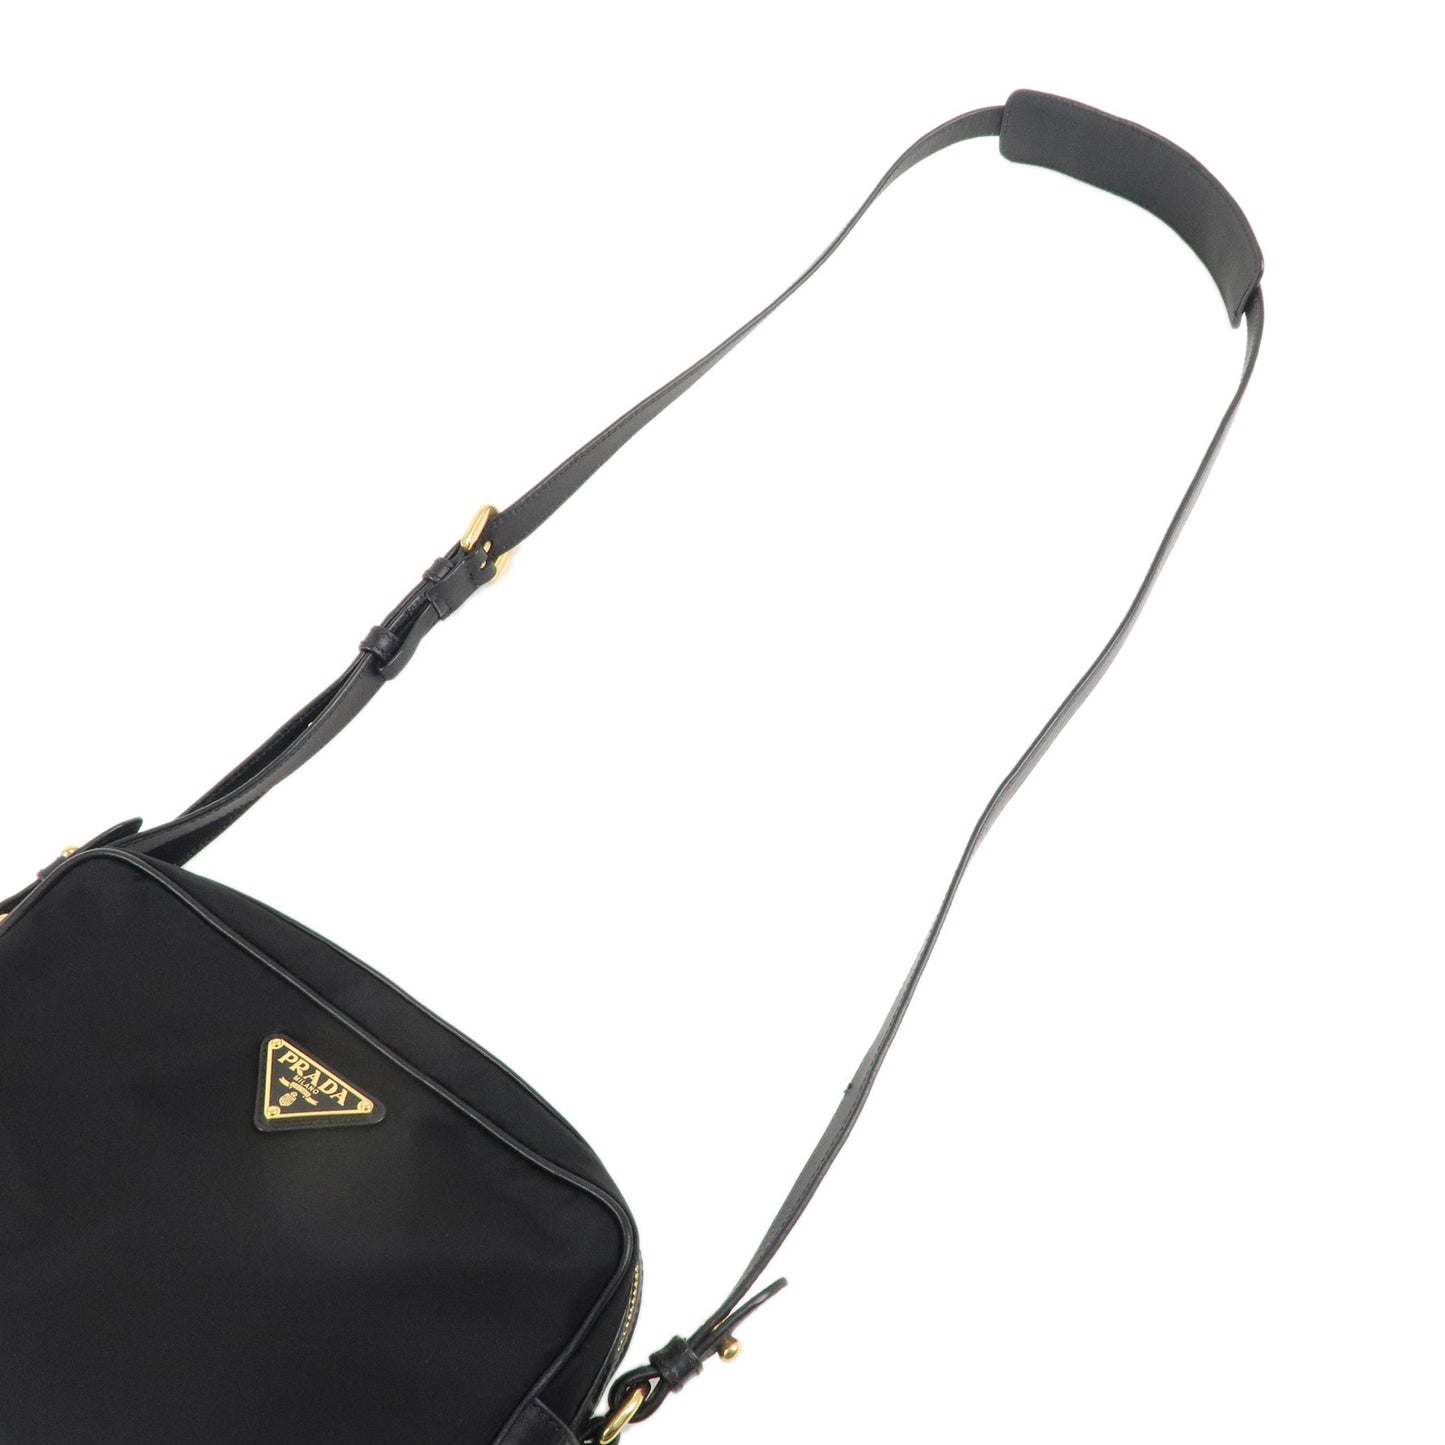 PRADA Logo Nylon Leather Shoulder Bag Crossbody Bag 1BH089